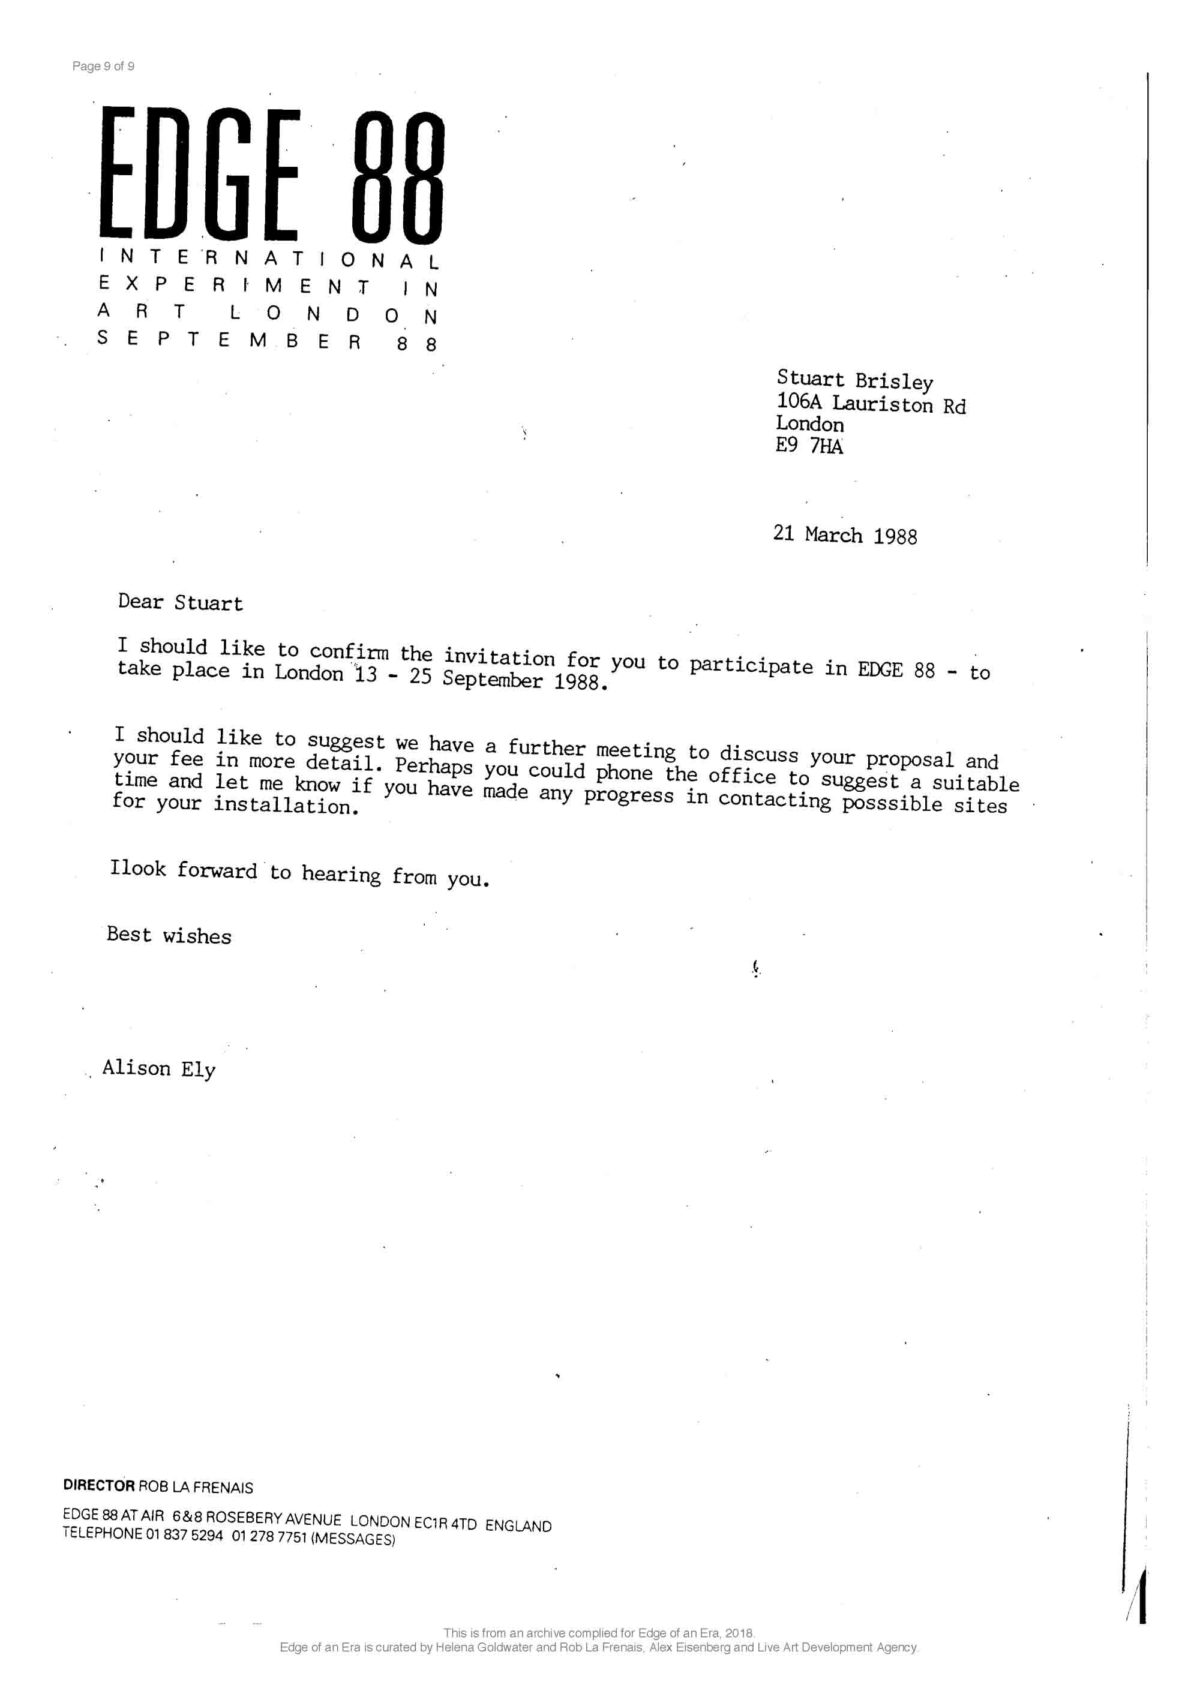 Stuart Brisley, Correspondence, 1988 (Page 9 of 9)